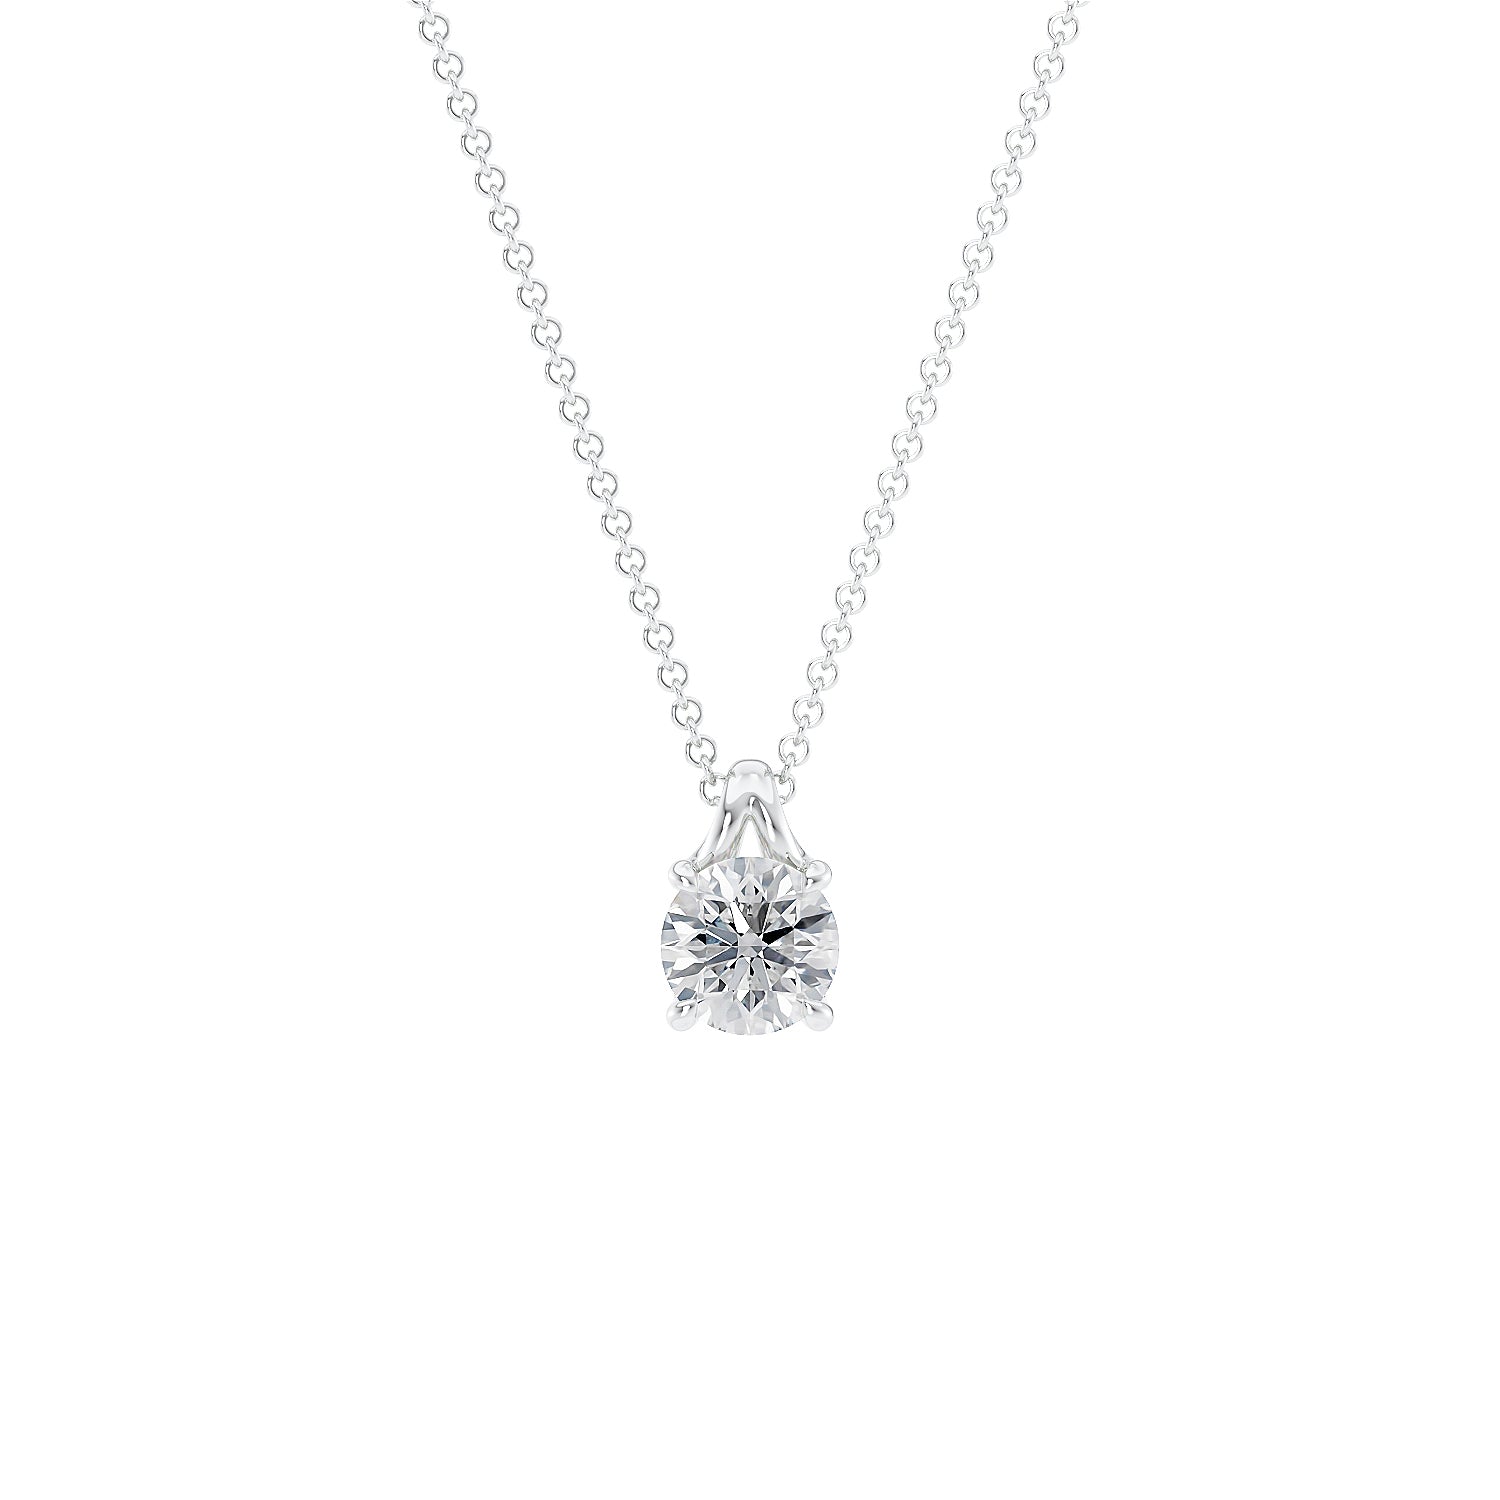 1 carat natural diamond pendant white gold.